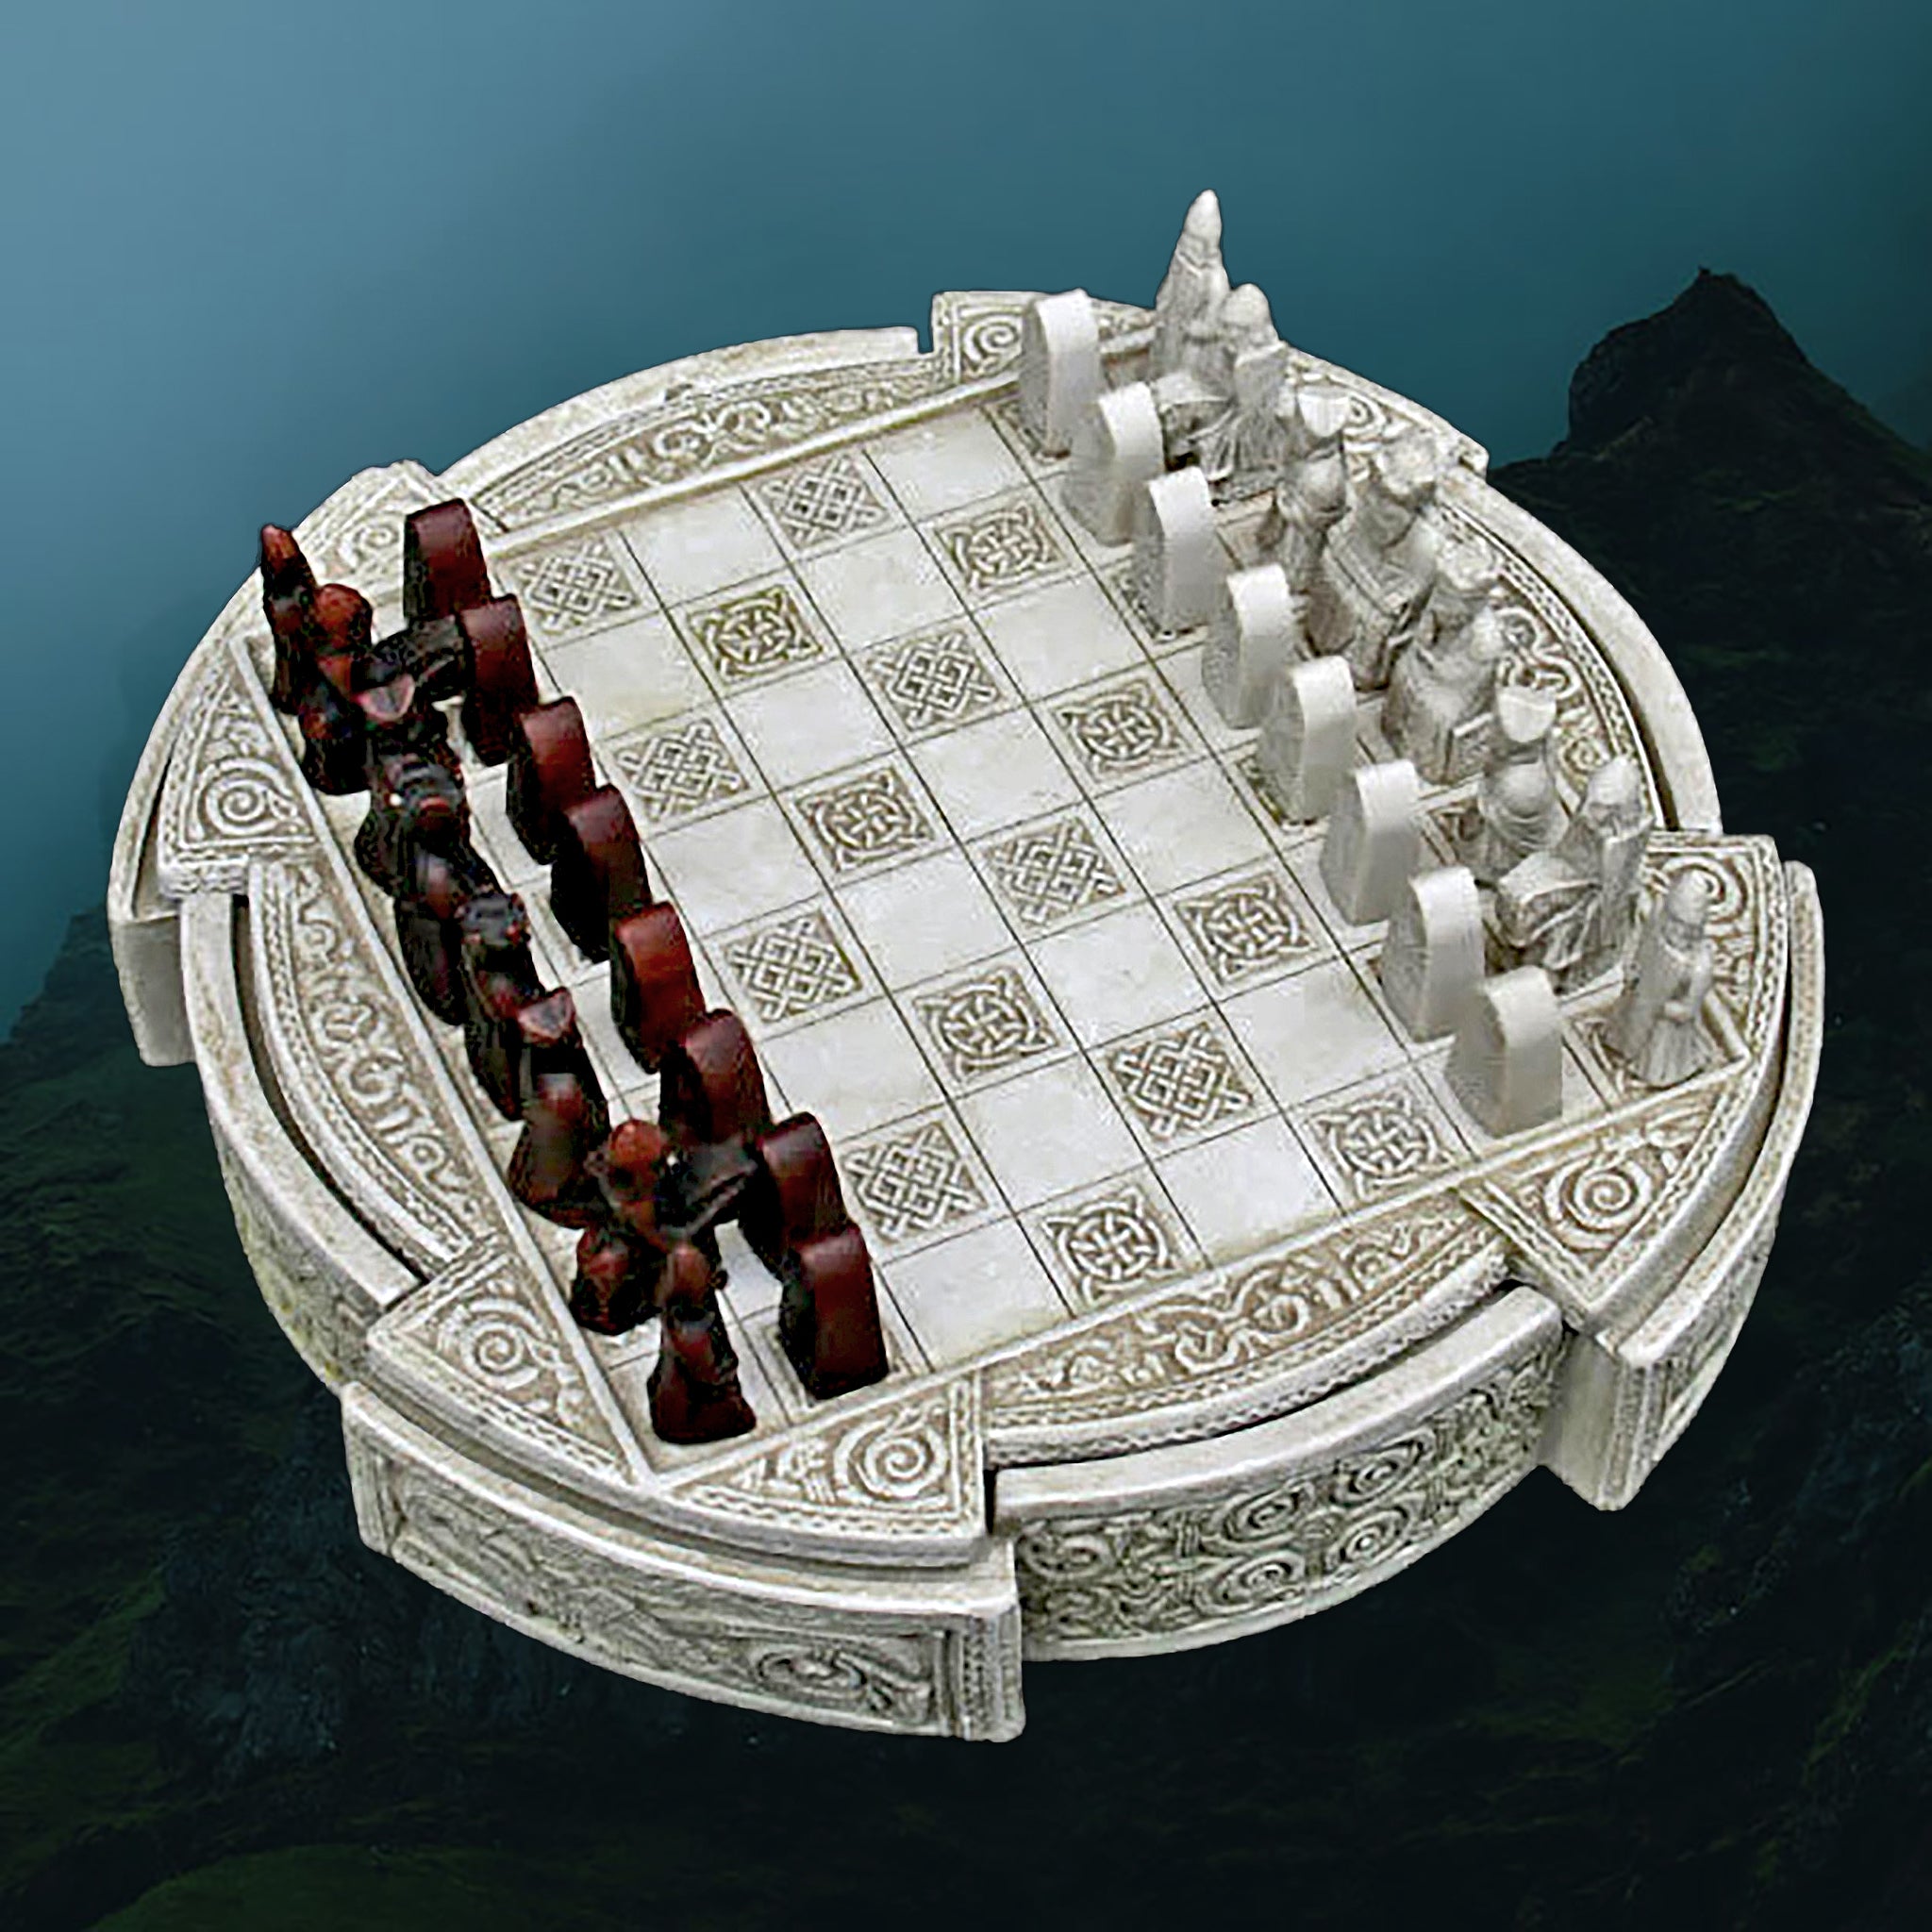 Lewis Chess Set Replica - Angle View